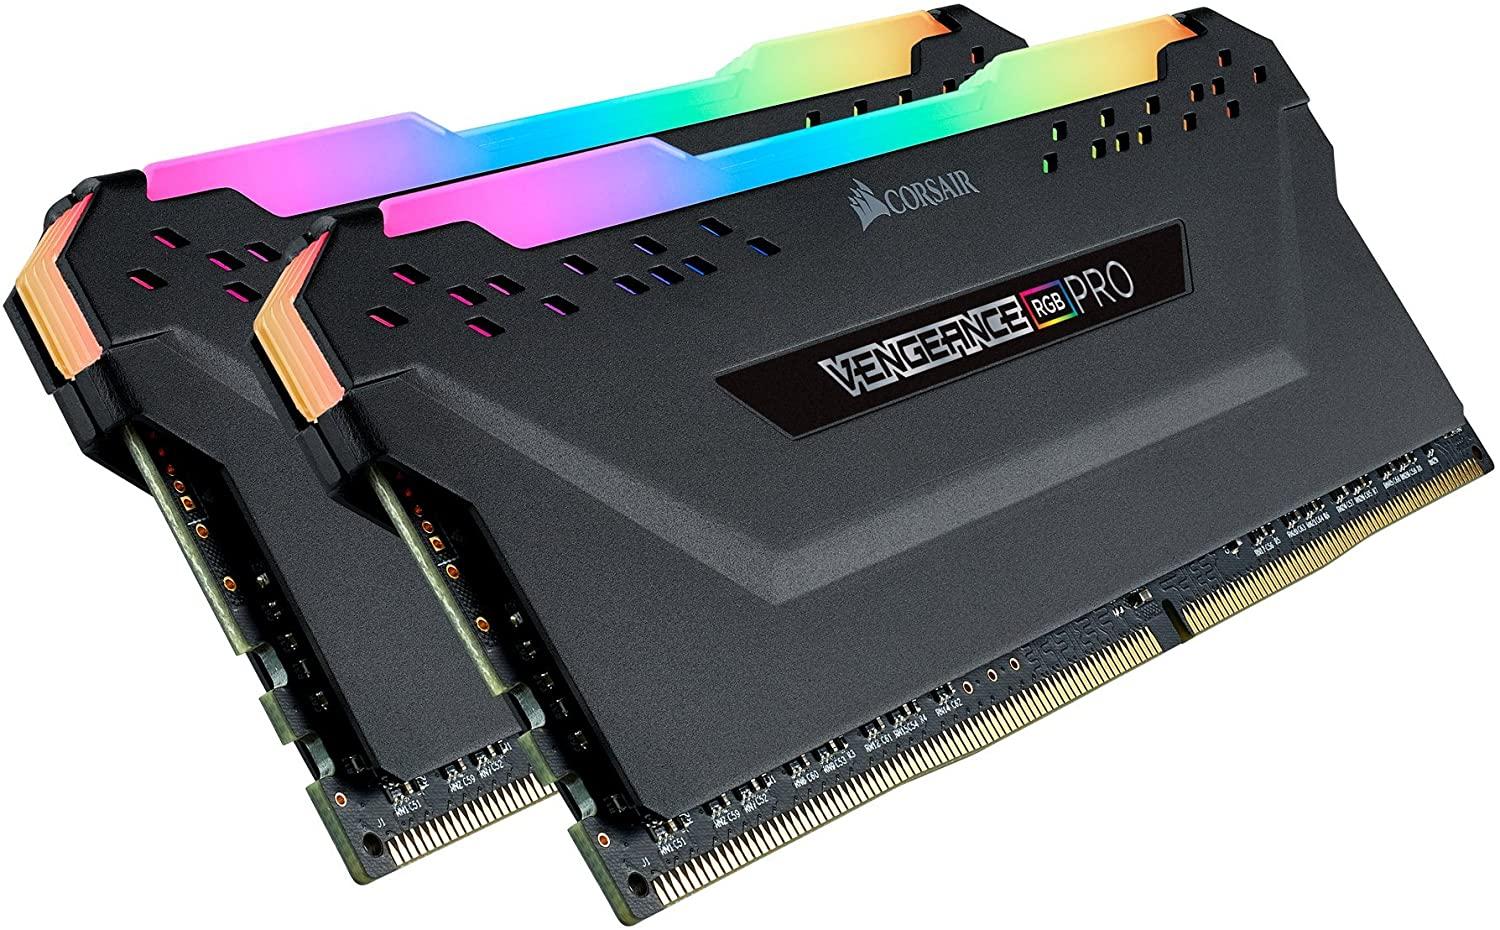 Corsair Vengeance RGB Pro 32GB DDR4 3200 Desktop Memory for $139.99 Shipped